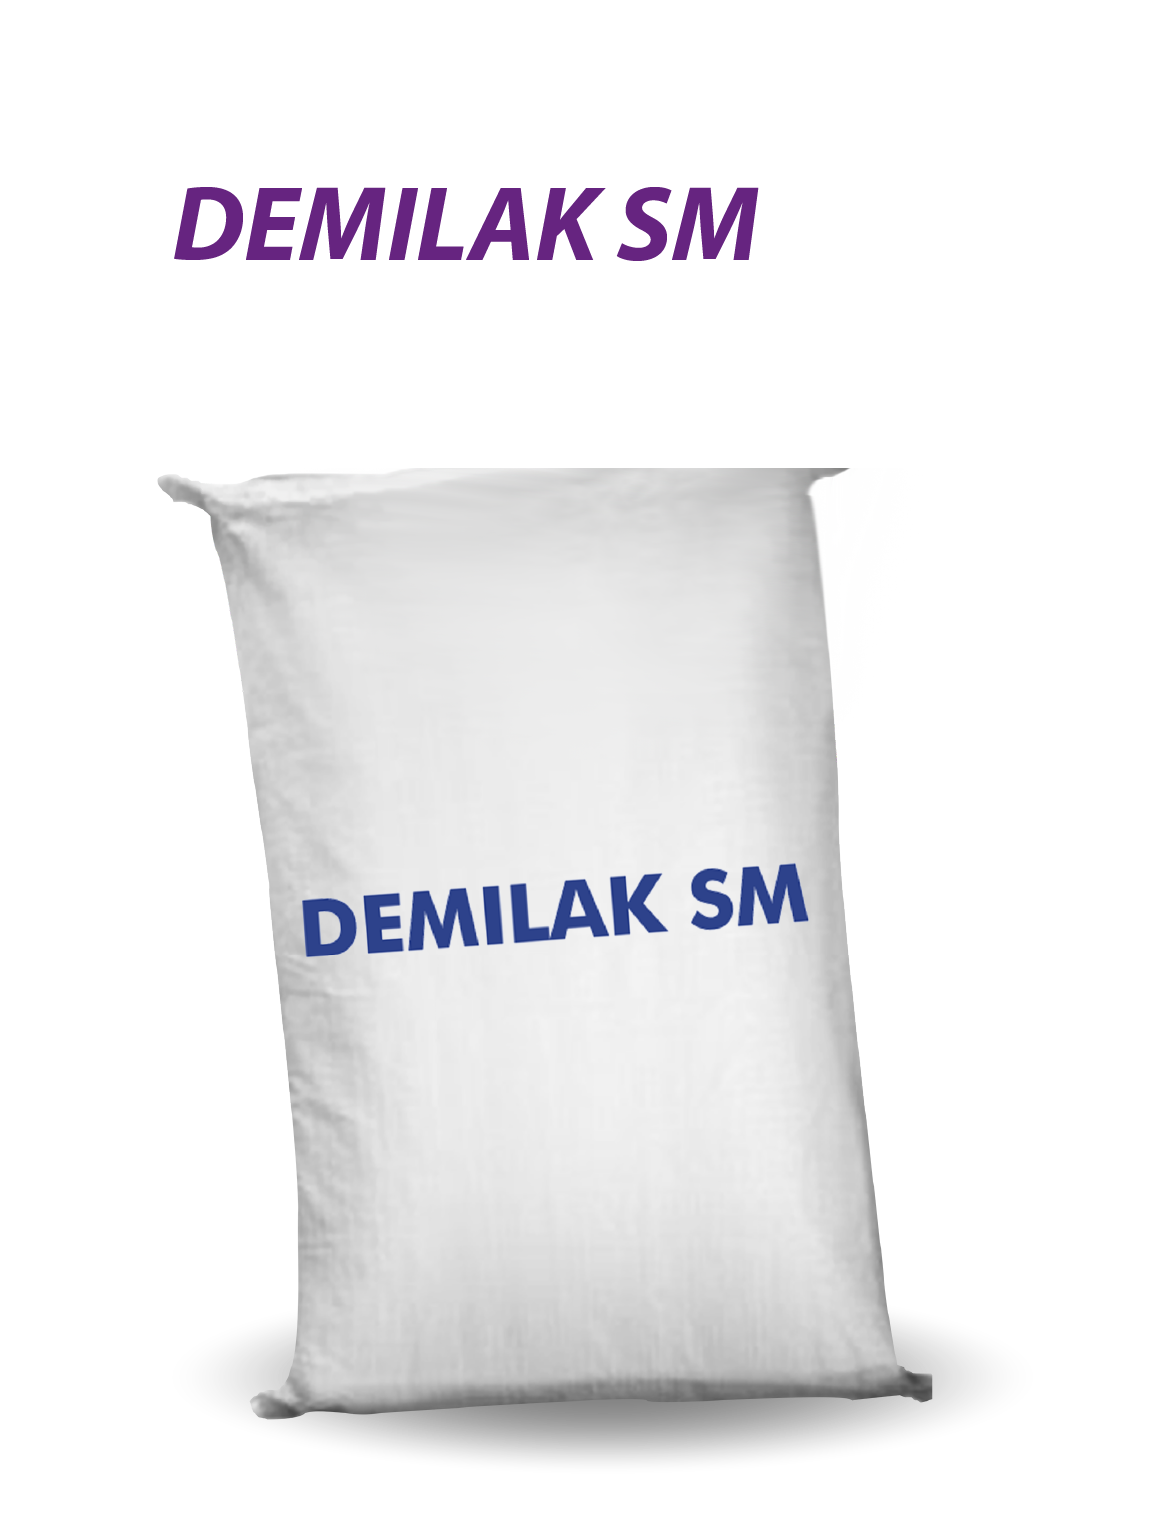 DEMILAK SM